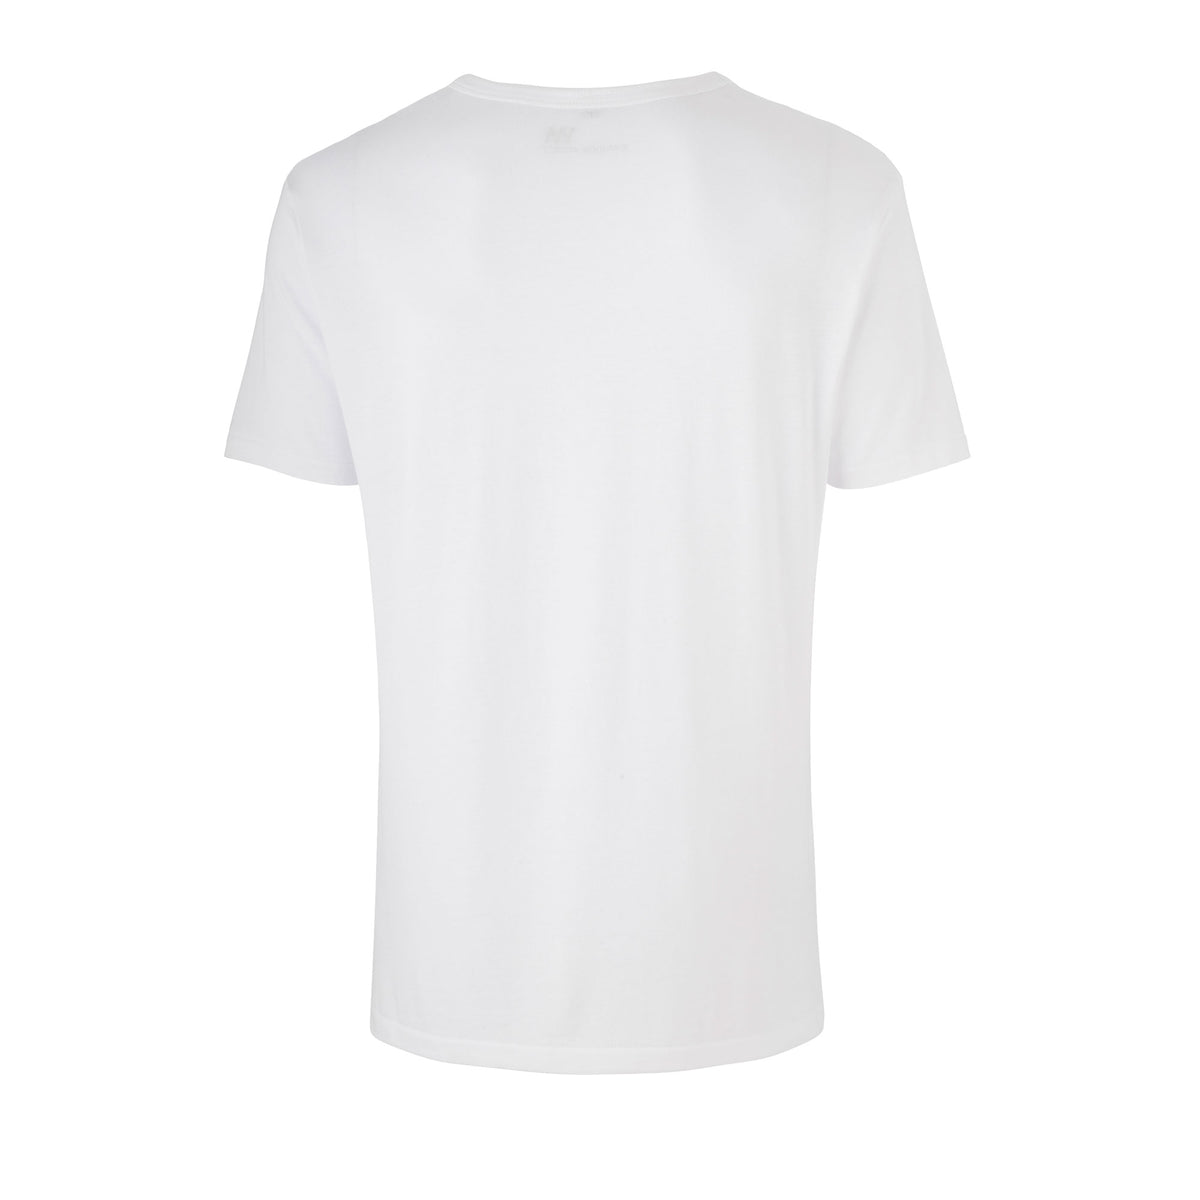 white mens yoga t-shirt back view 